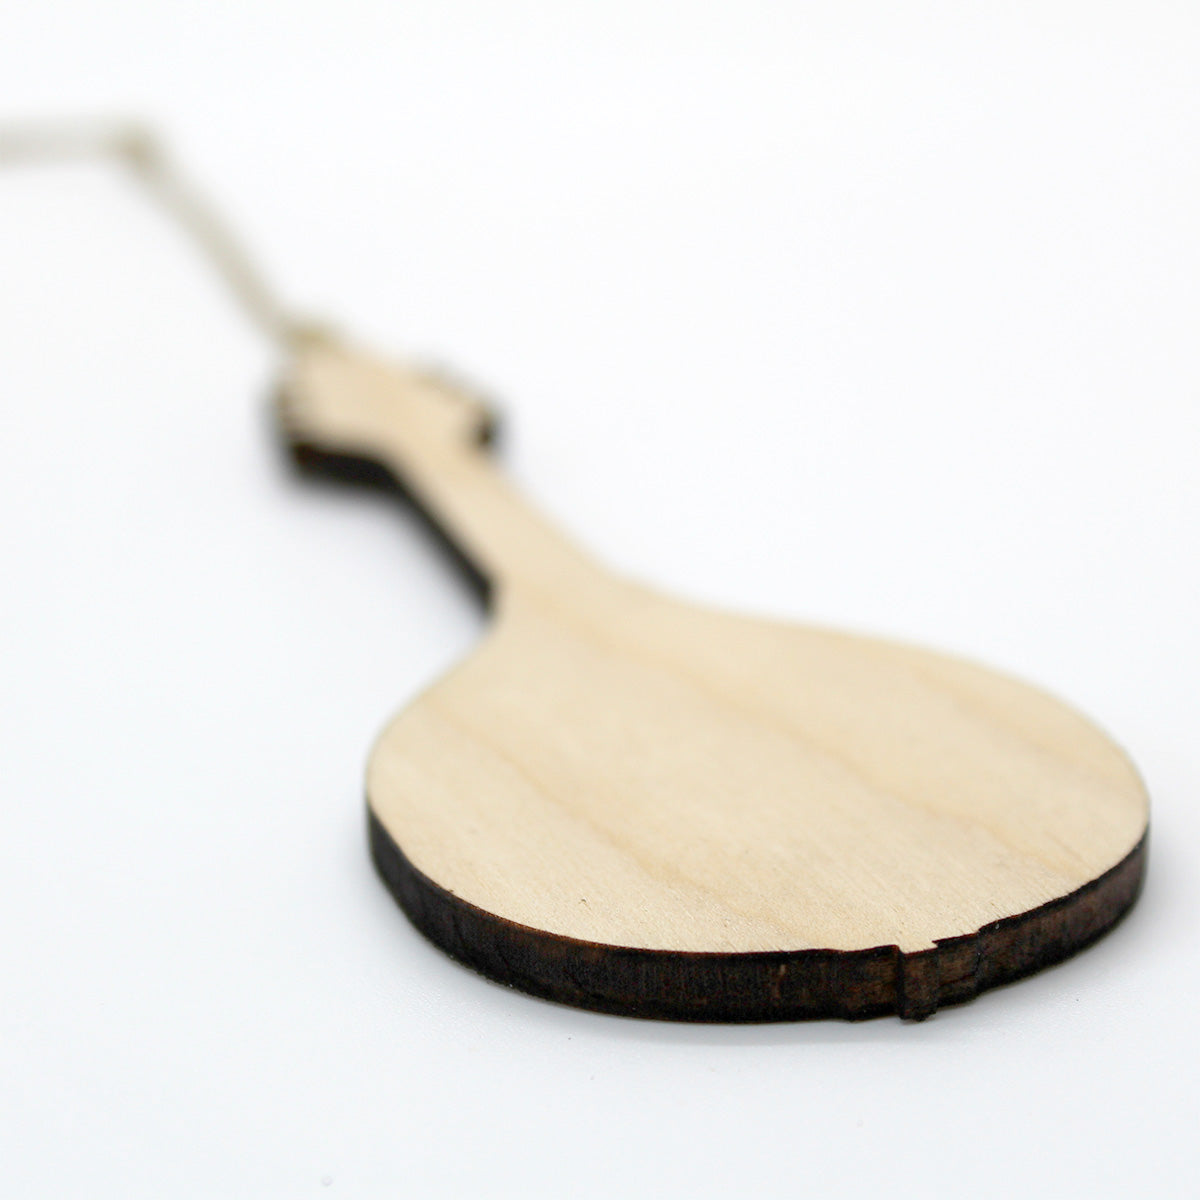 Mandolin Engraved Wood Ornament